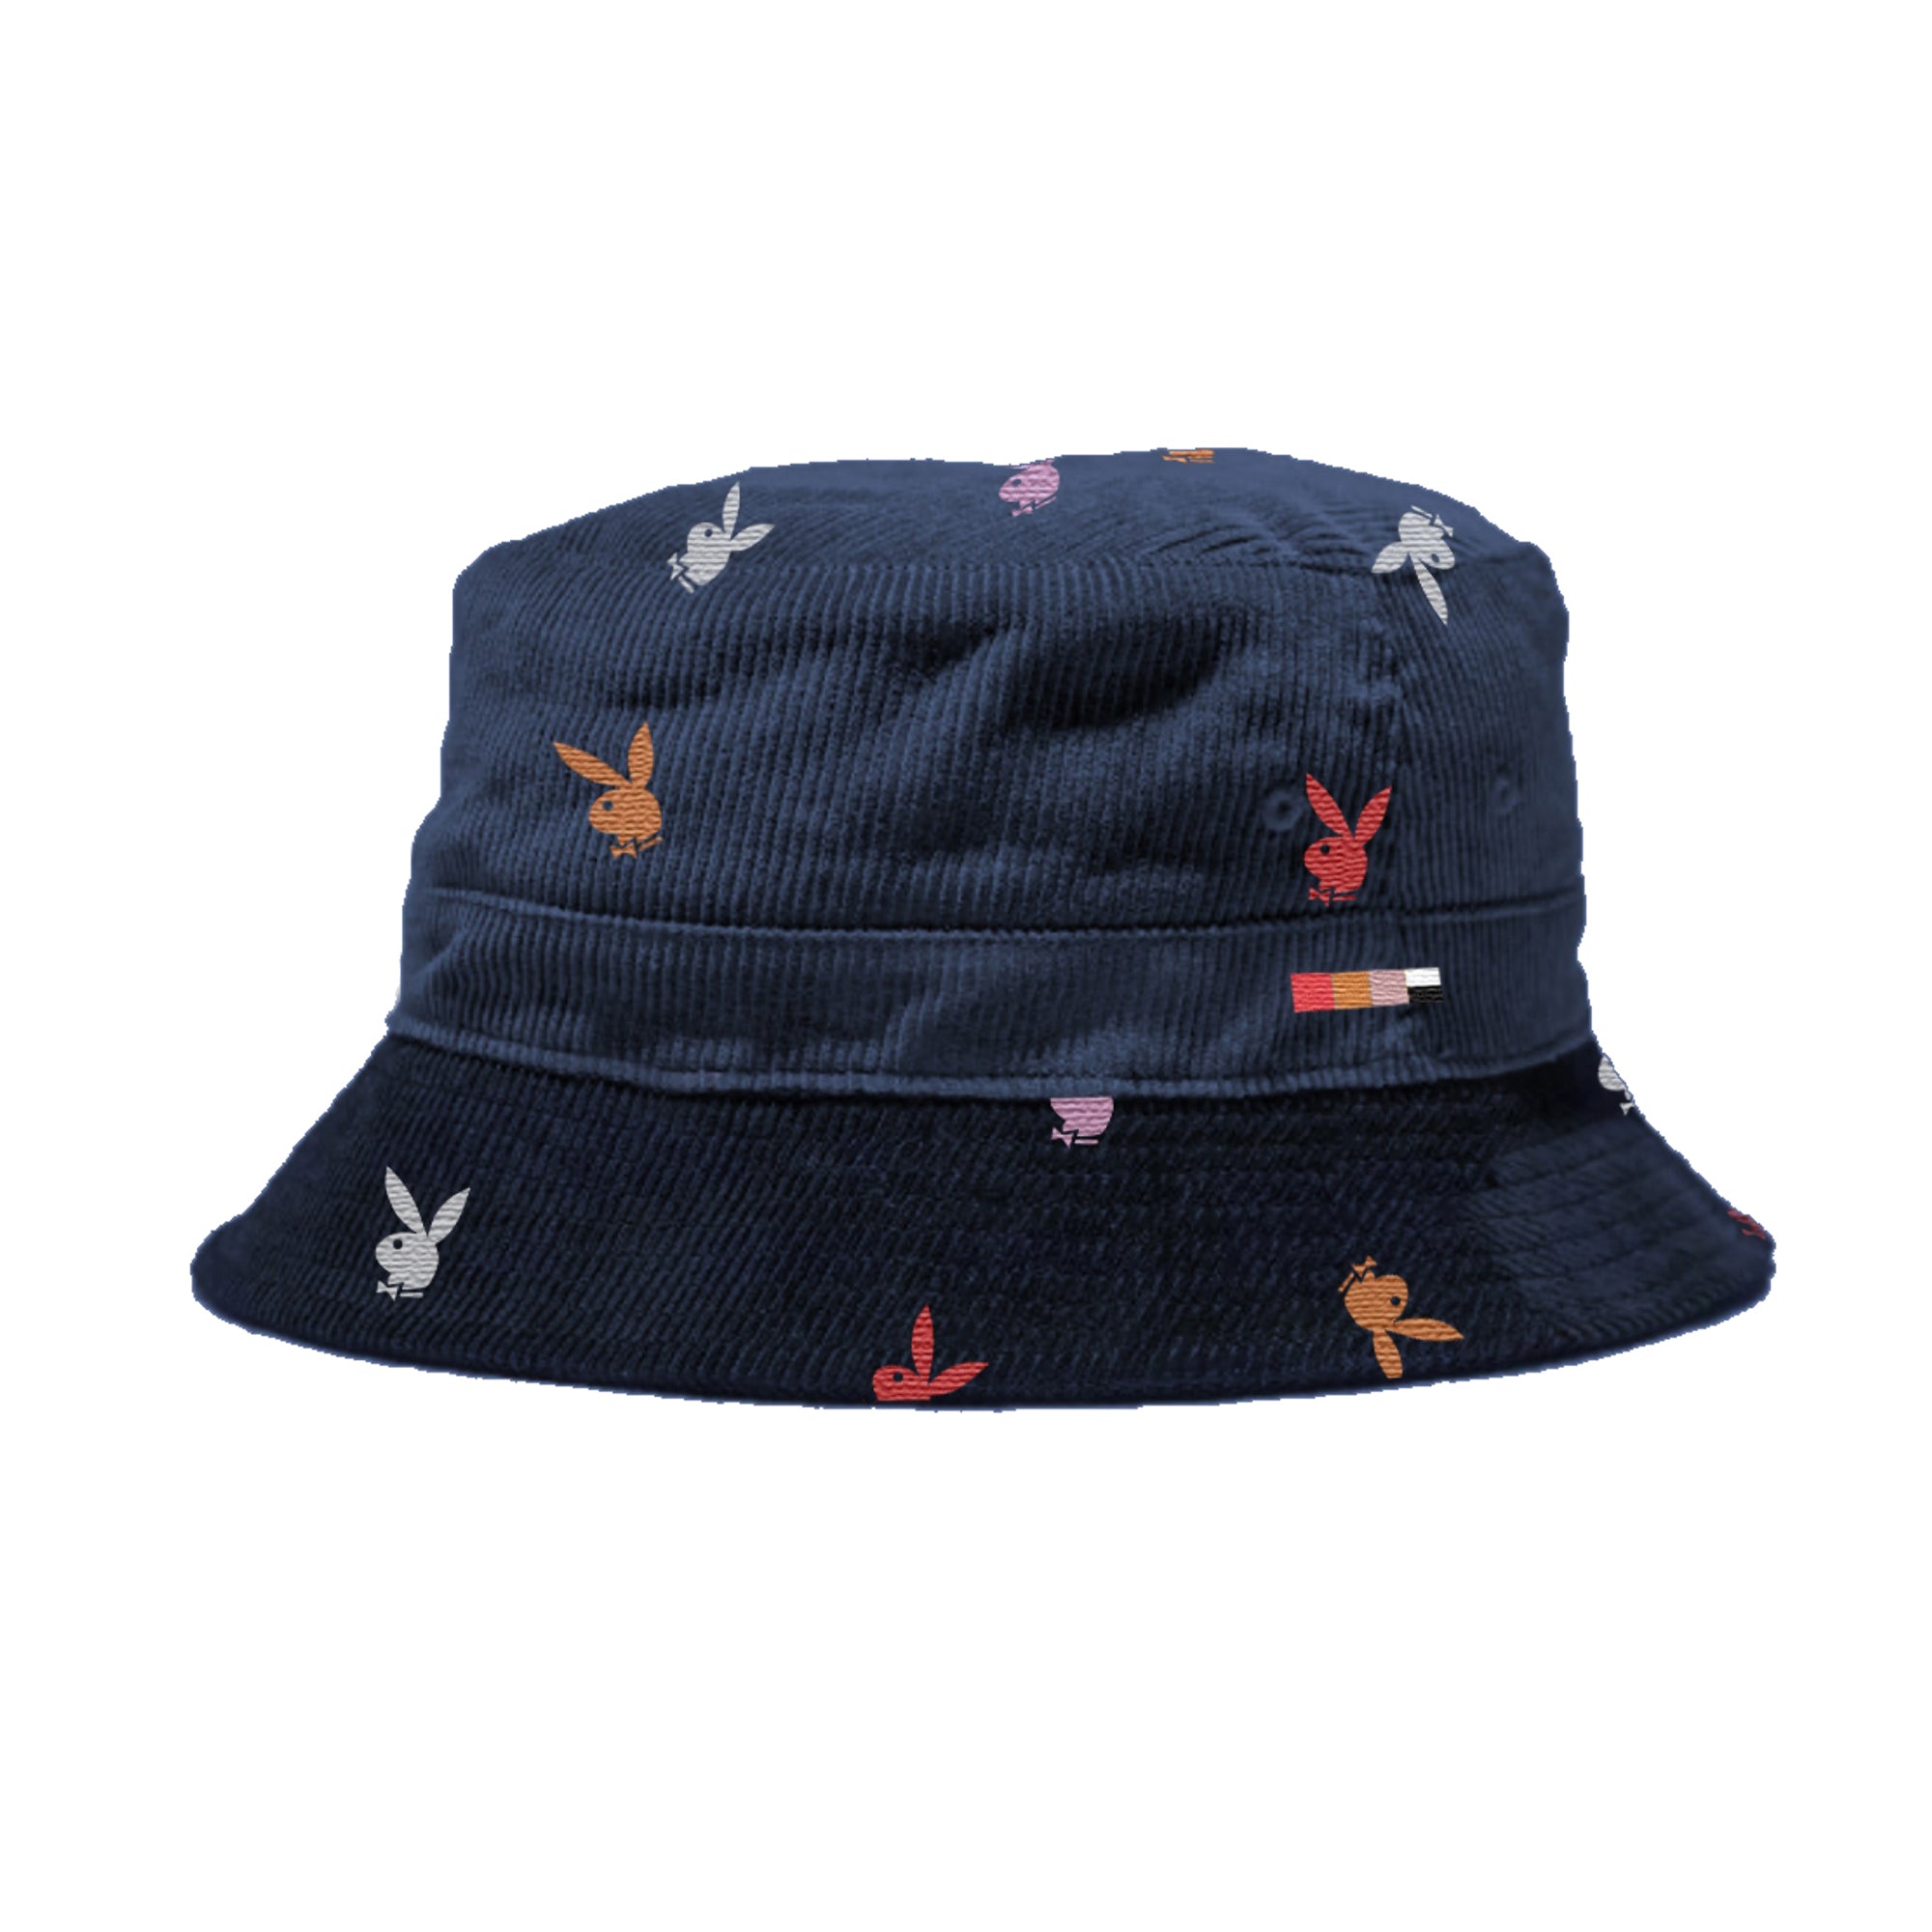 Tokyo Club Navy Bucket Hat